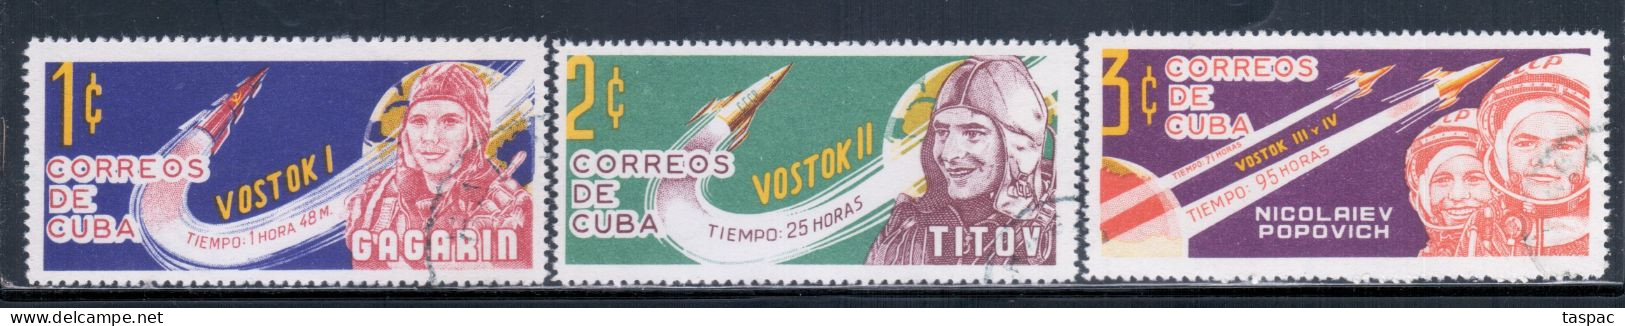 Cuba 1963-64 Mi# 835-837 Used - Soviet Space Flights / Cosmonauts (I) - Nordamerika